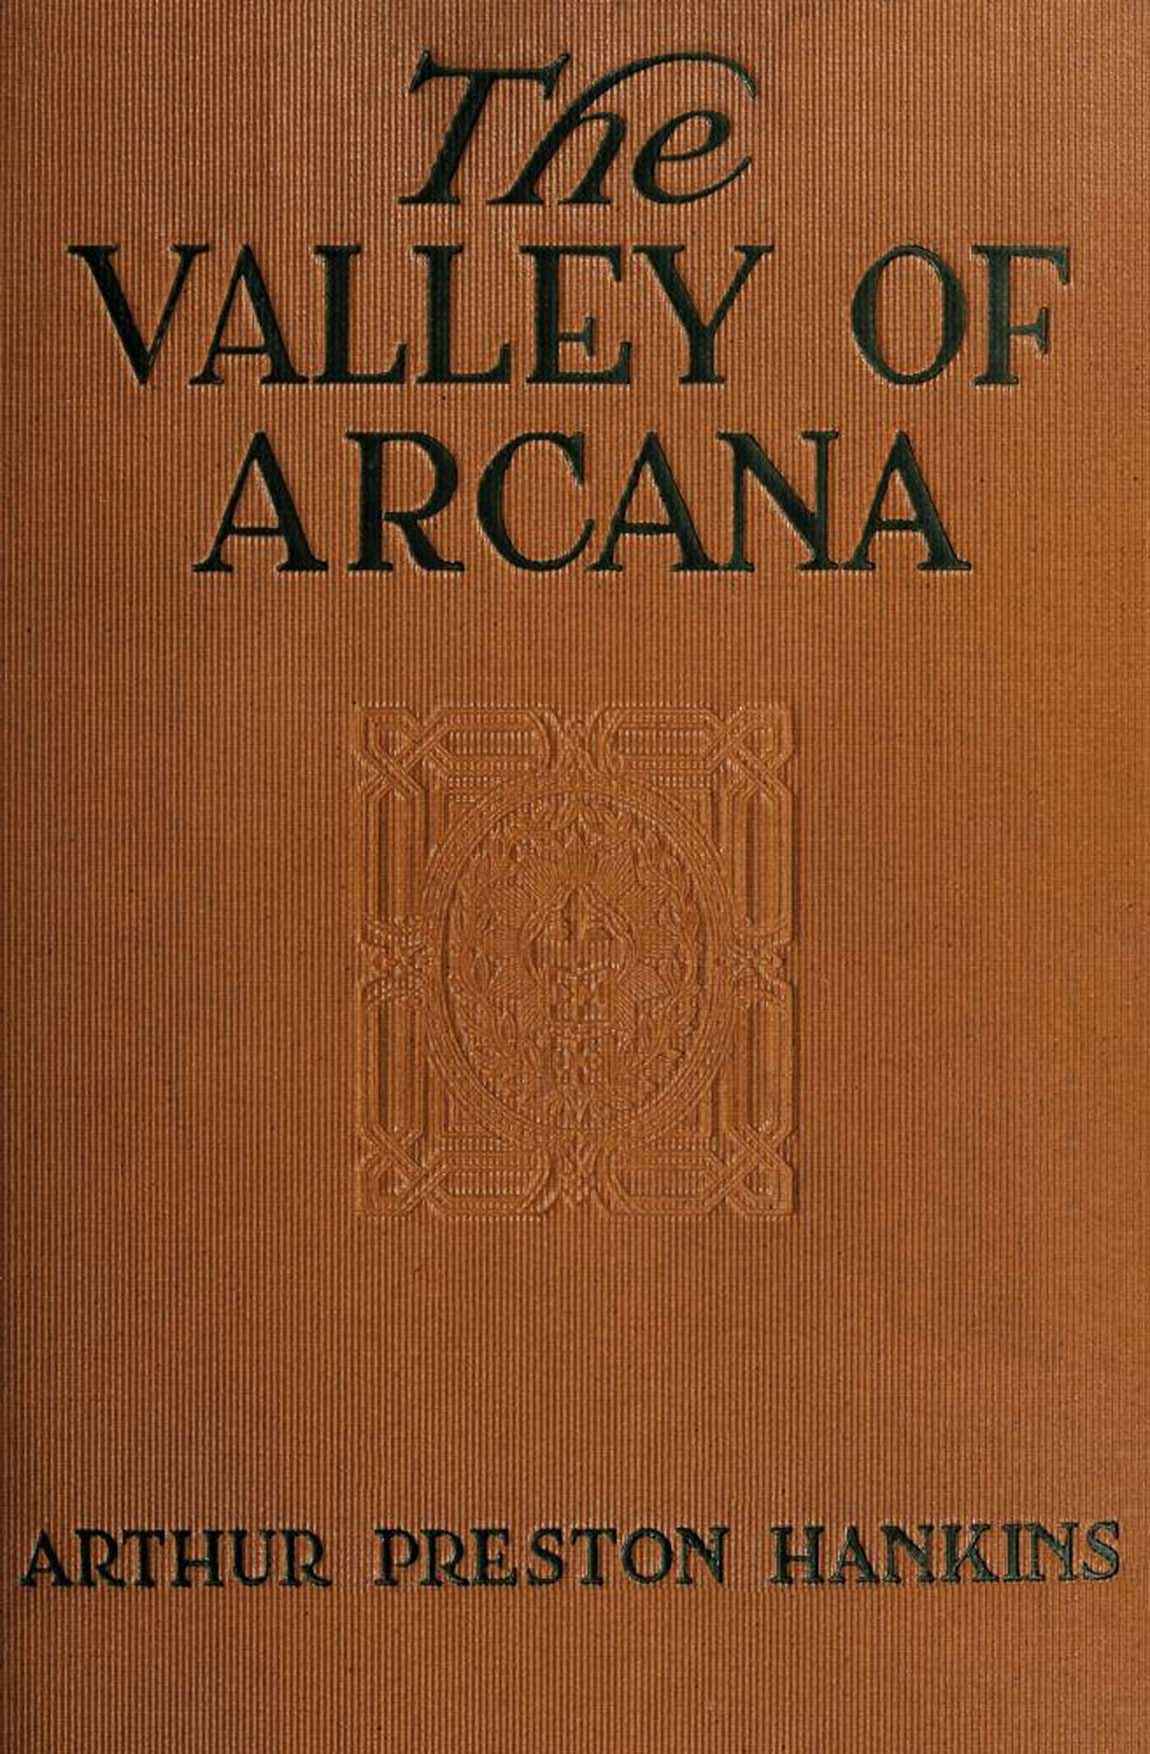 The Valley of Arcana, by Arthur Preston Hankins—A Project Gutenberg eBook